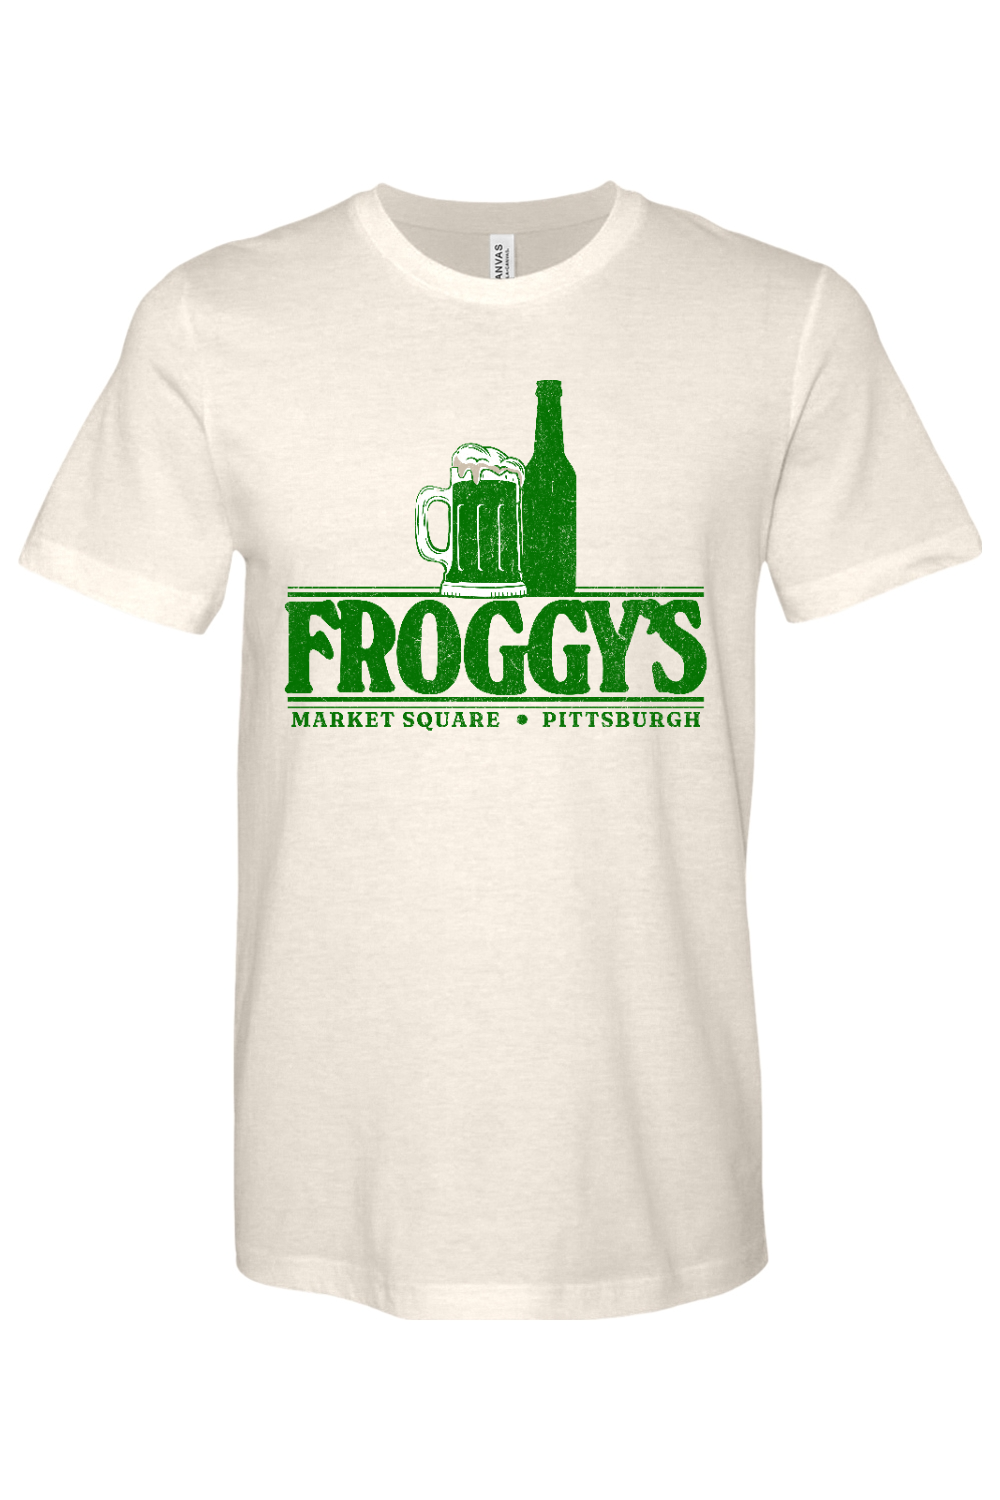 Froggy's Market Square - Pittsburgh - Yinzylvania